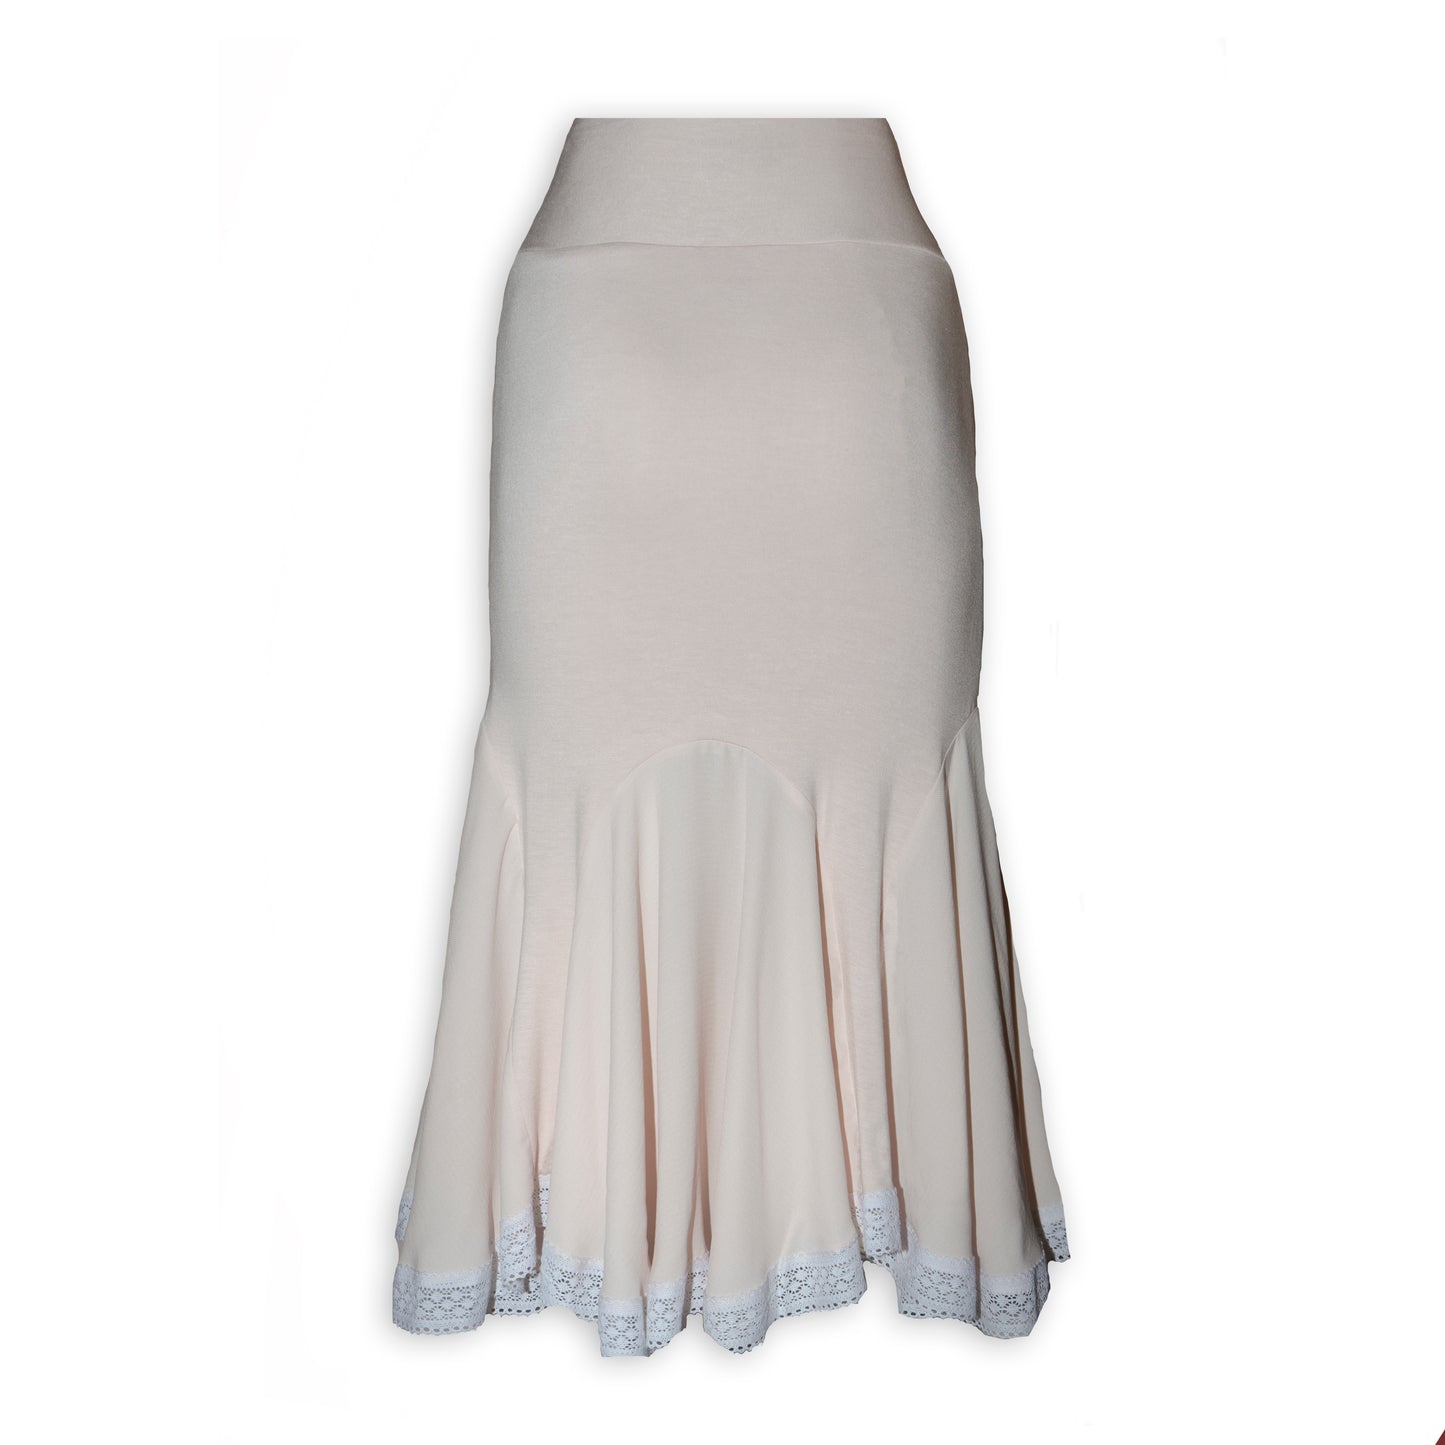 Nude Chiffon Midi Length Skirt with Lace